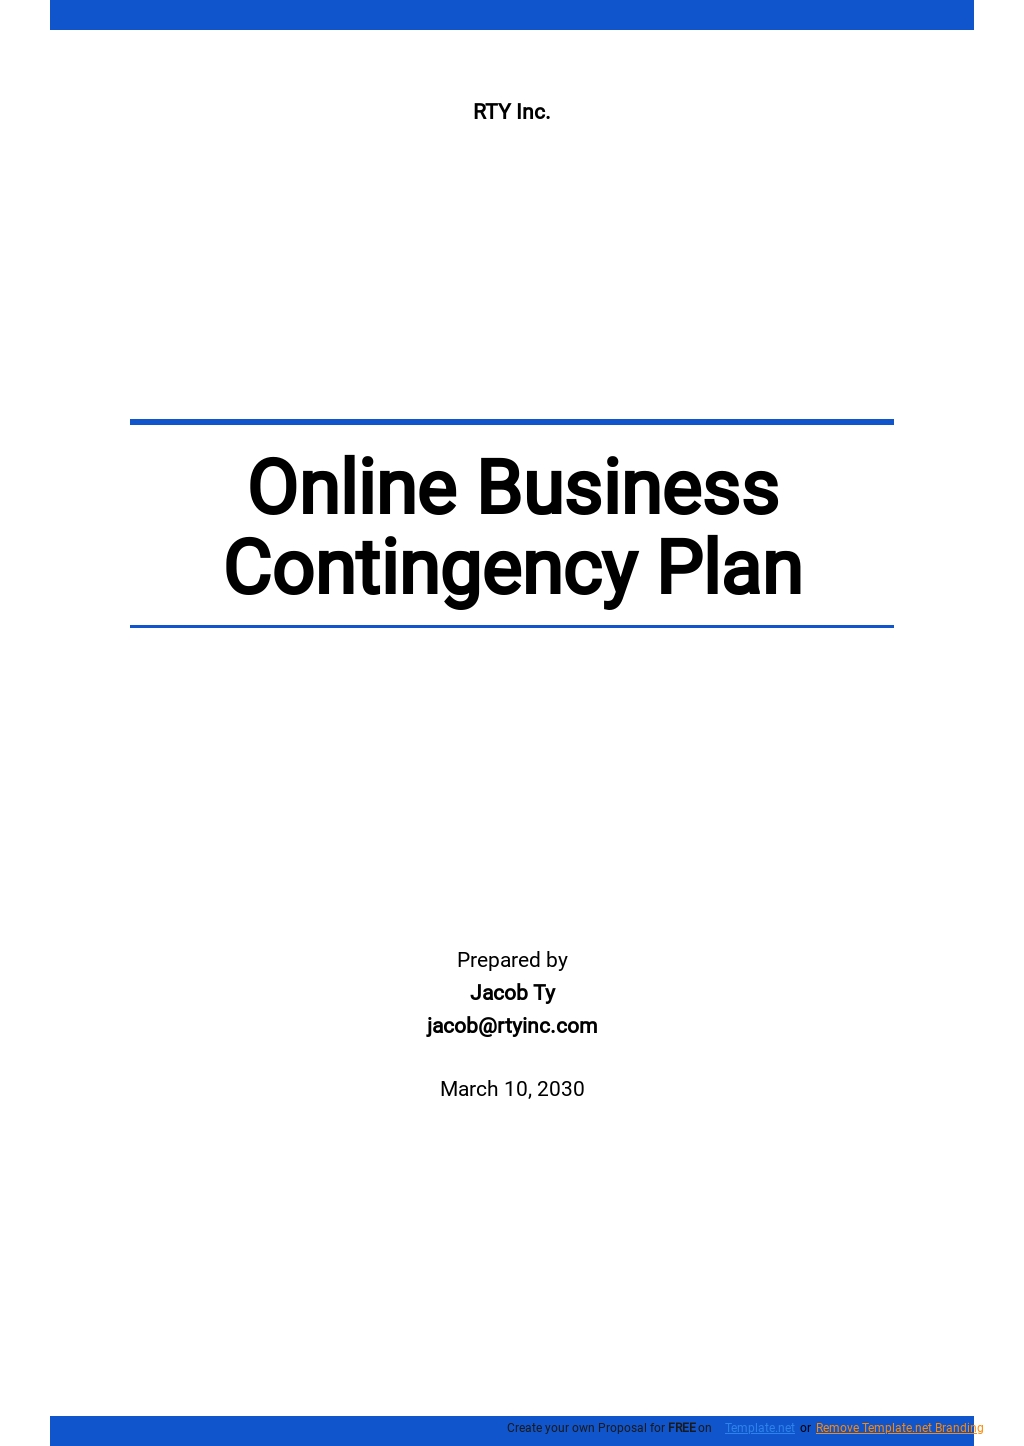 Online Business Contingency Plan Template.jpe